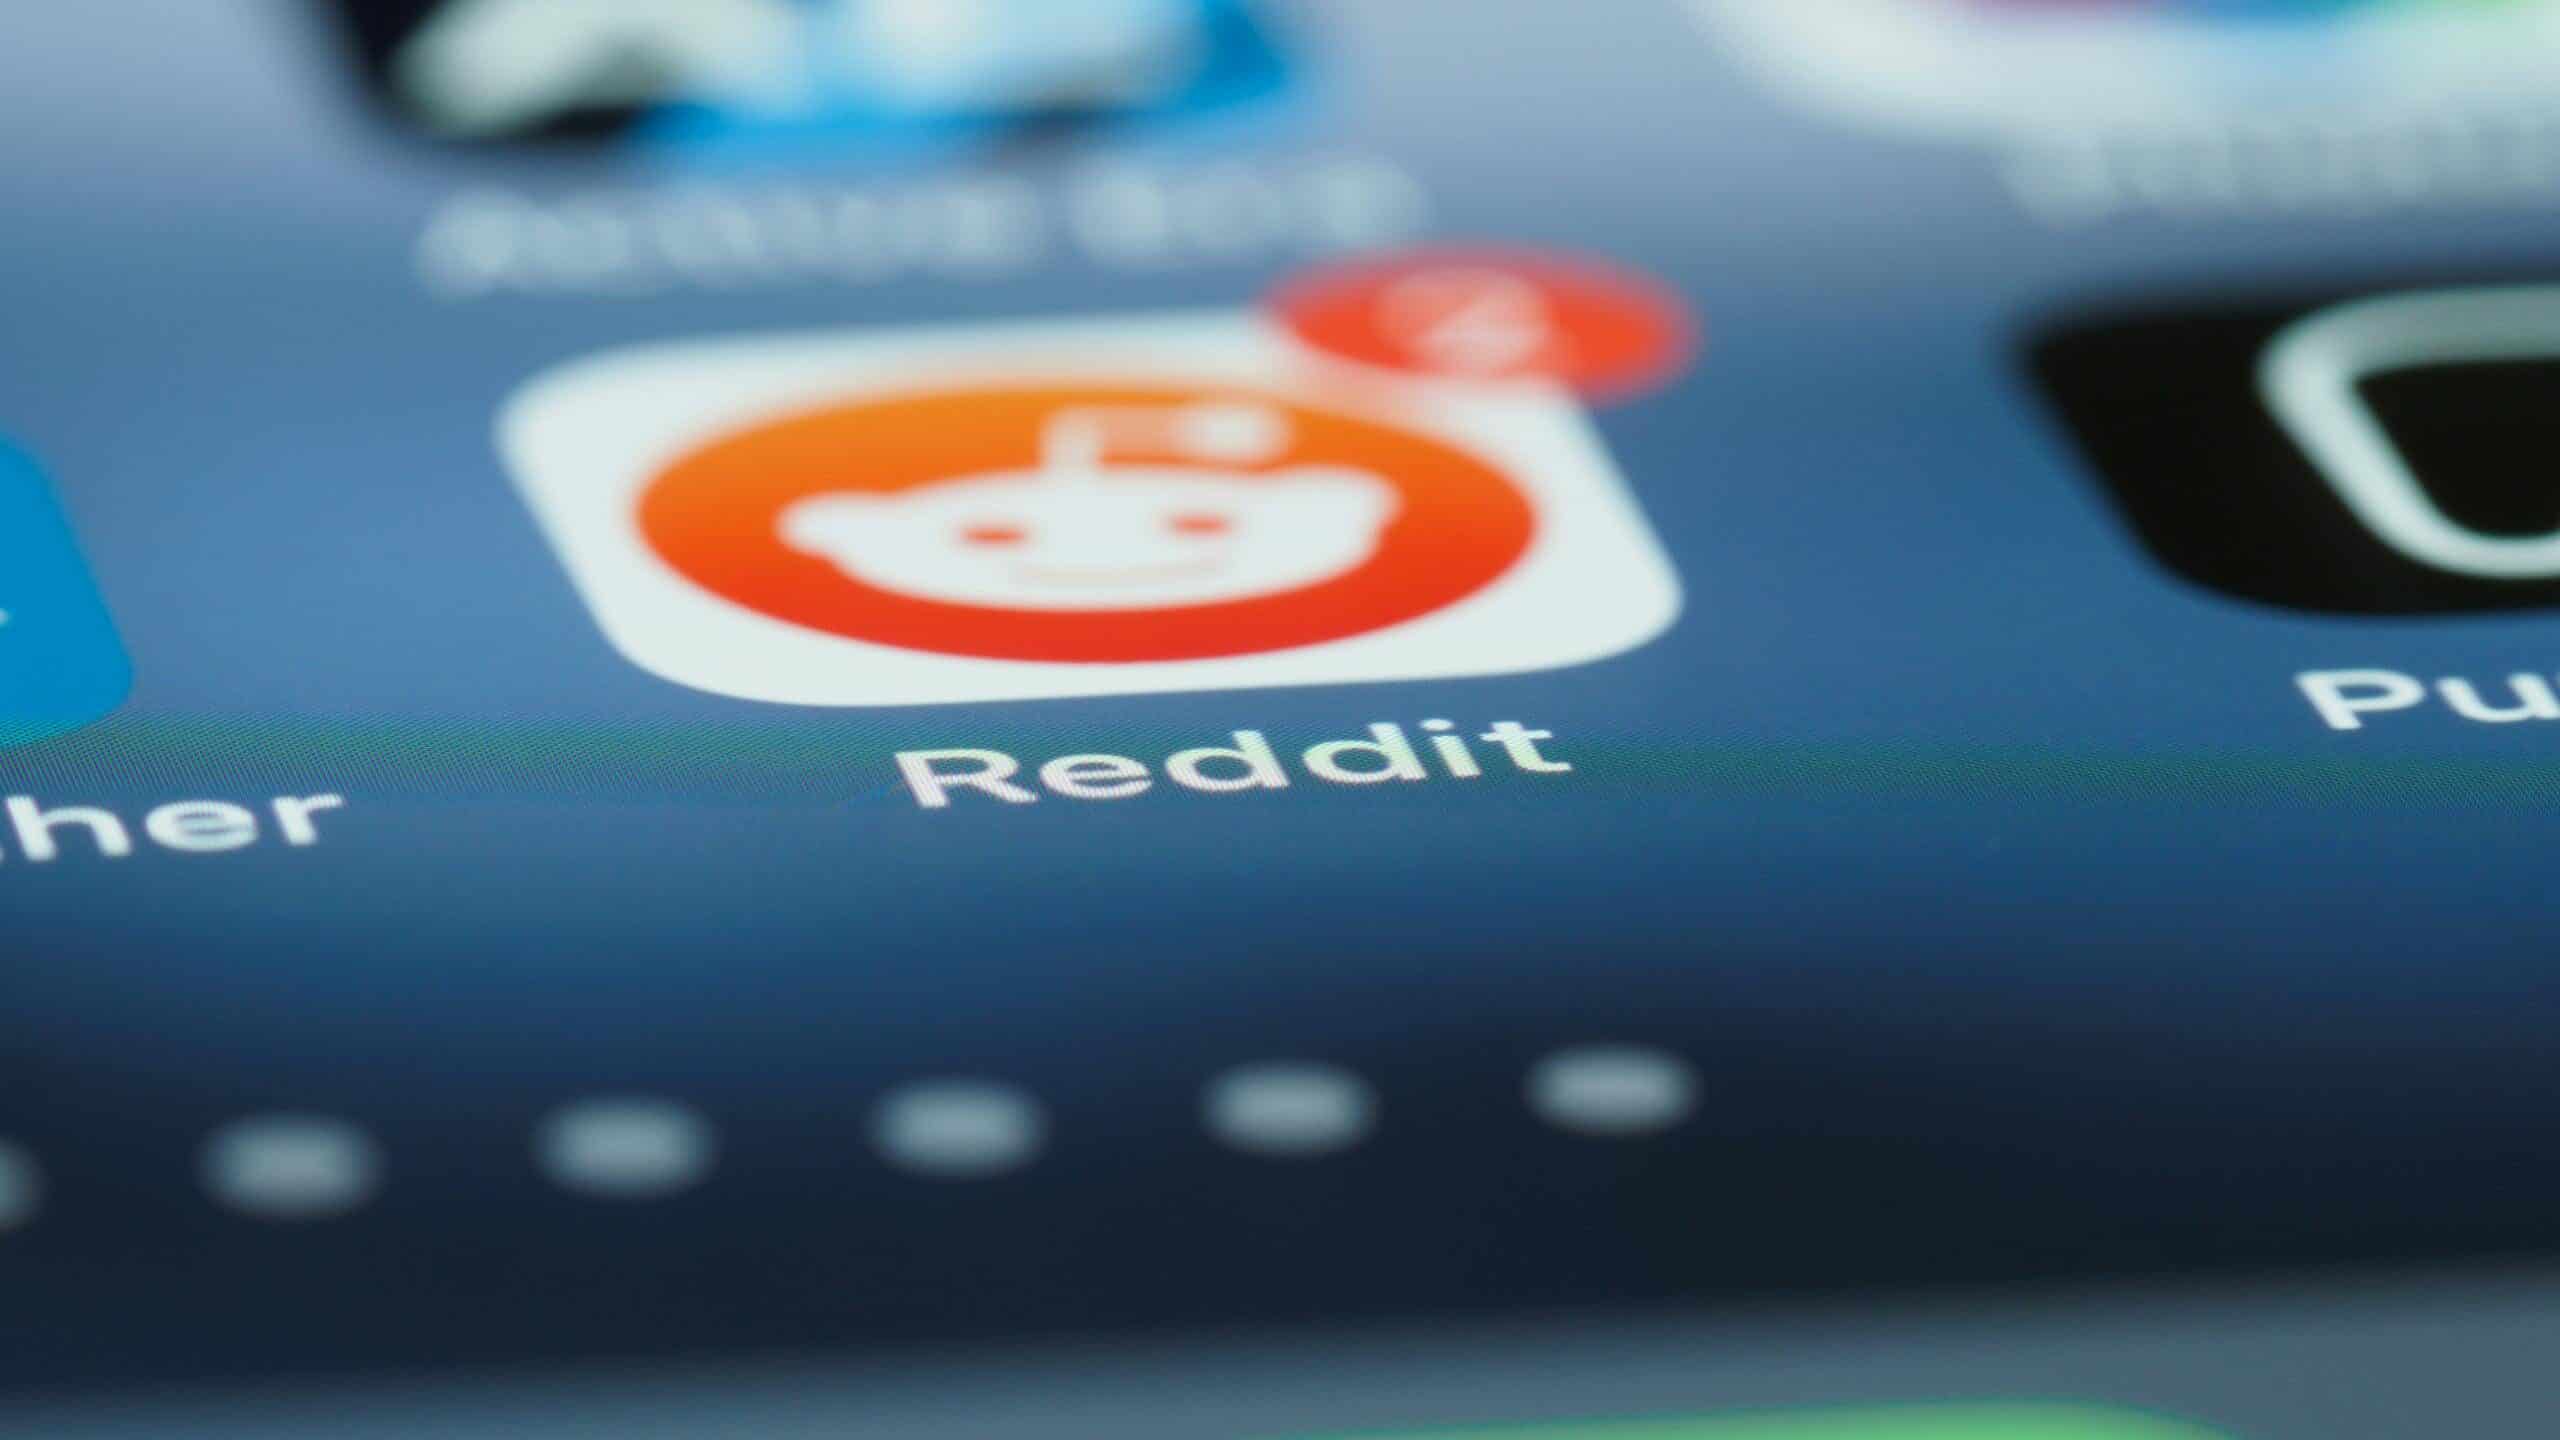 reddit smartphone